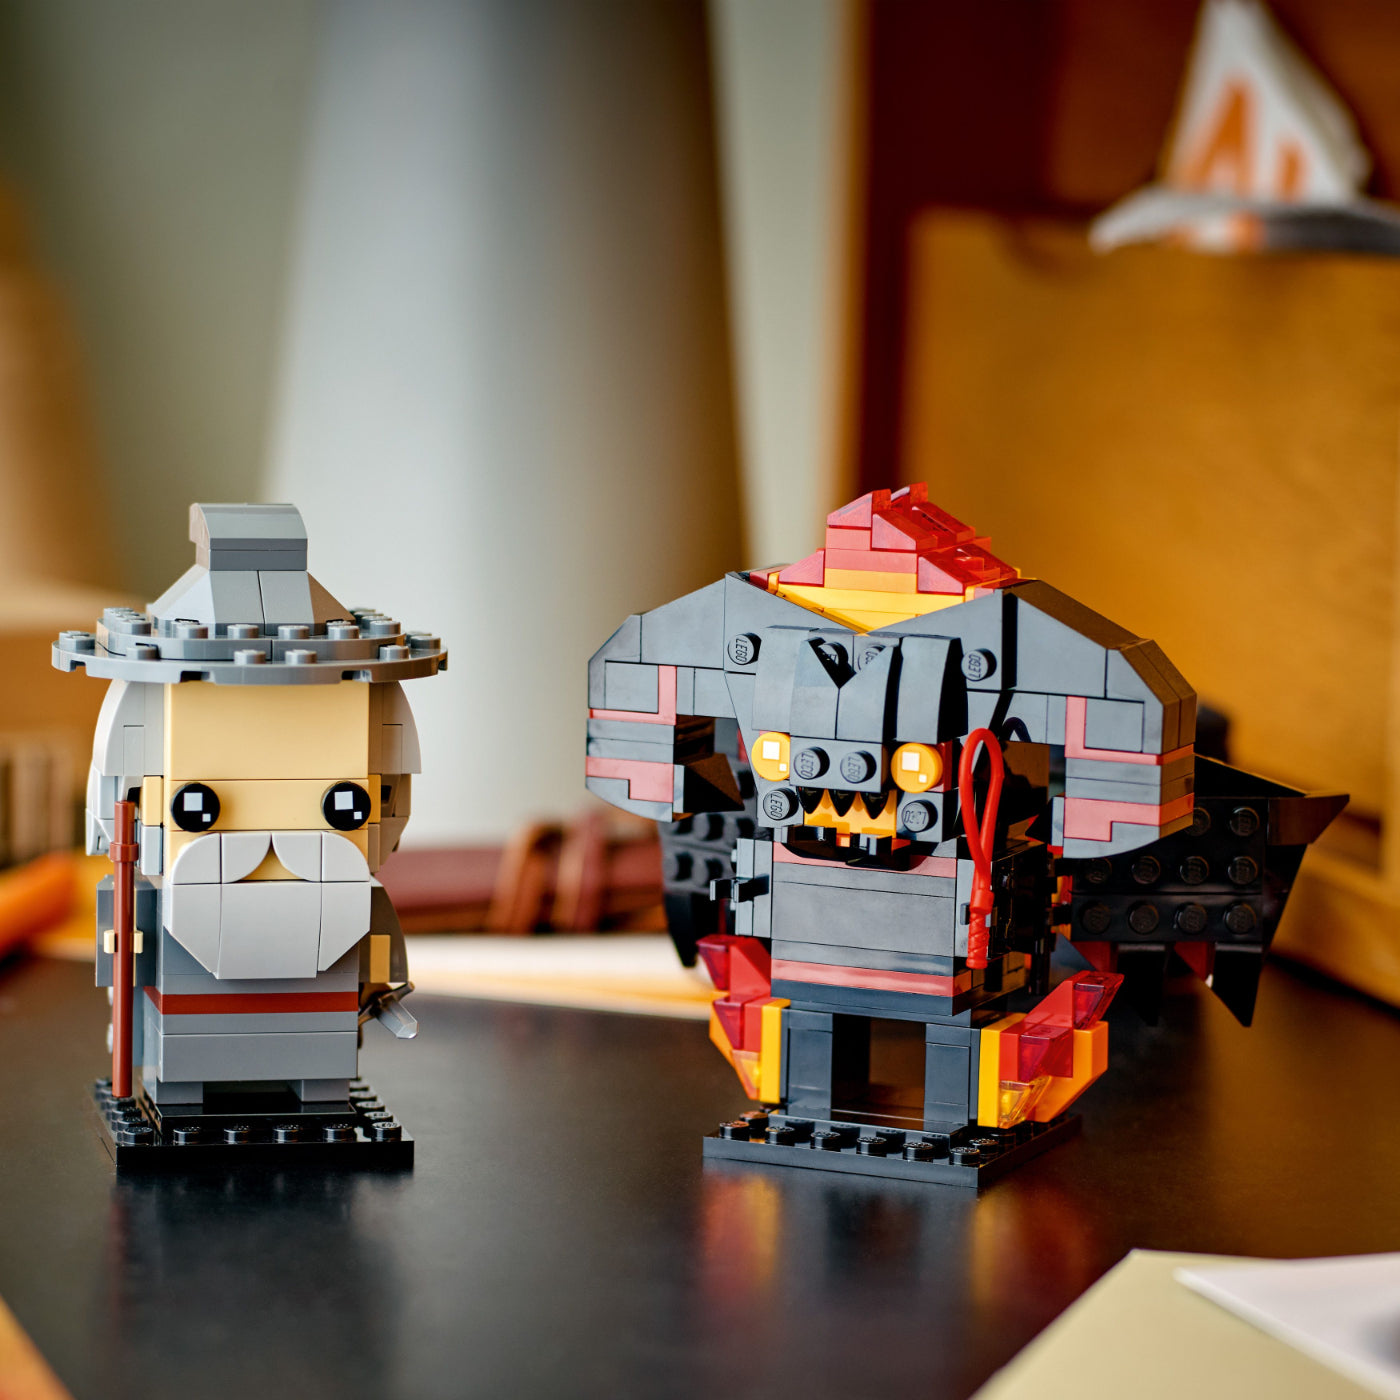 LEGO® BrickHeadz™ Gandalf the Grey™ & Balrog™ (40631)